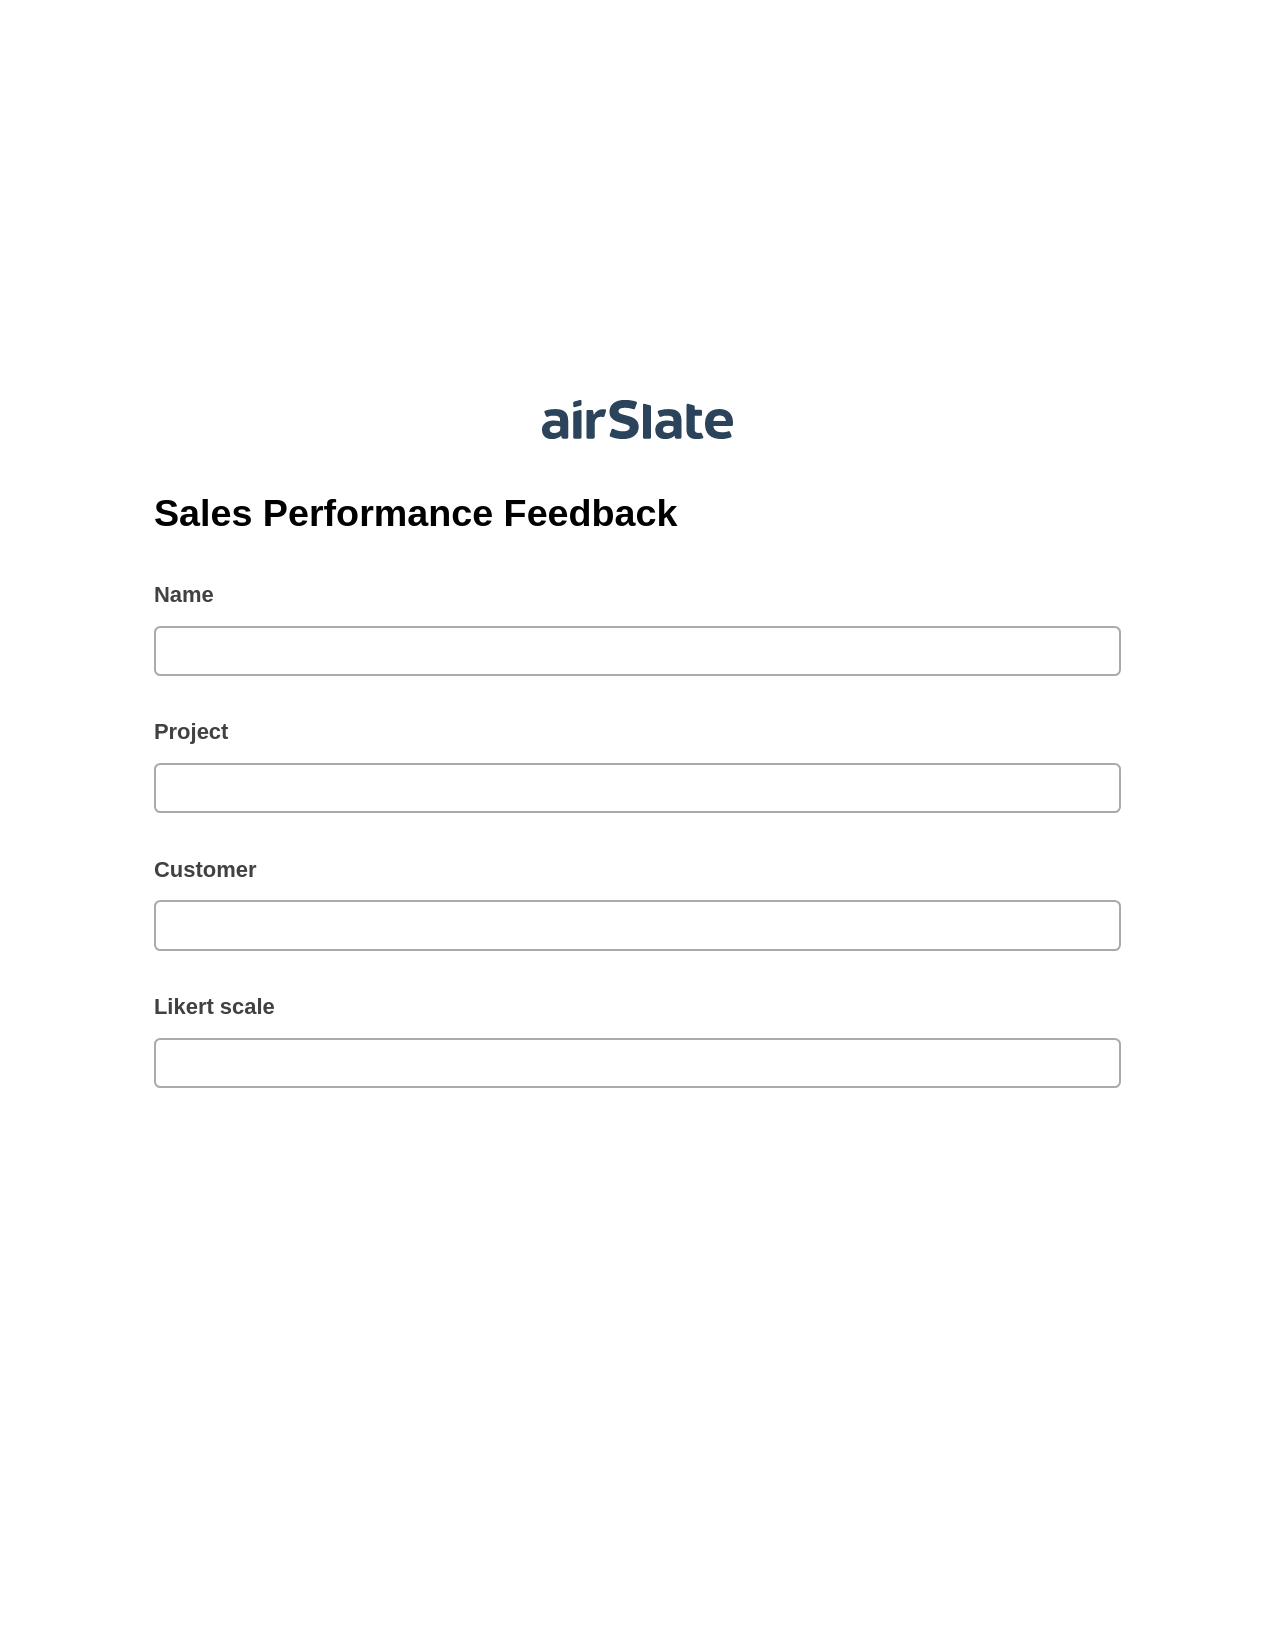 Multirole Sales Performance Feedback Pre-fill Slate from MS Dynamics 365 Records Bot, Audit Trail Bot, Slack Notification Postfinish Bot